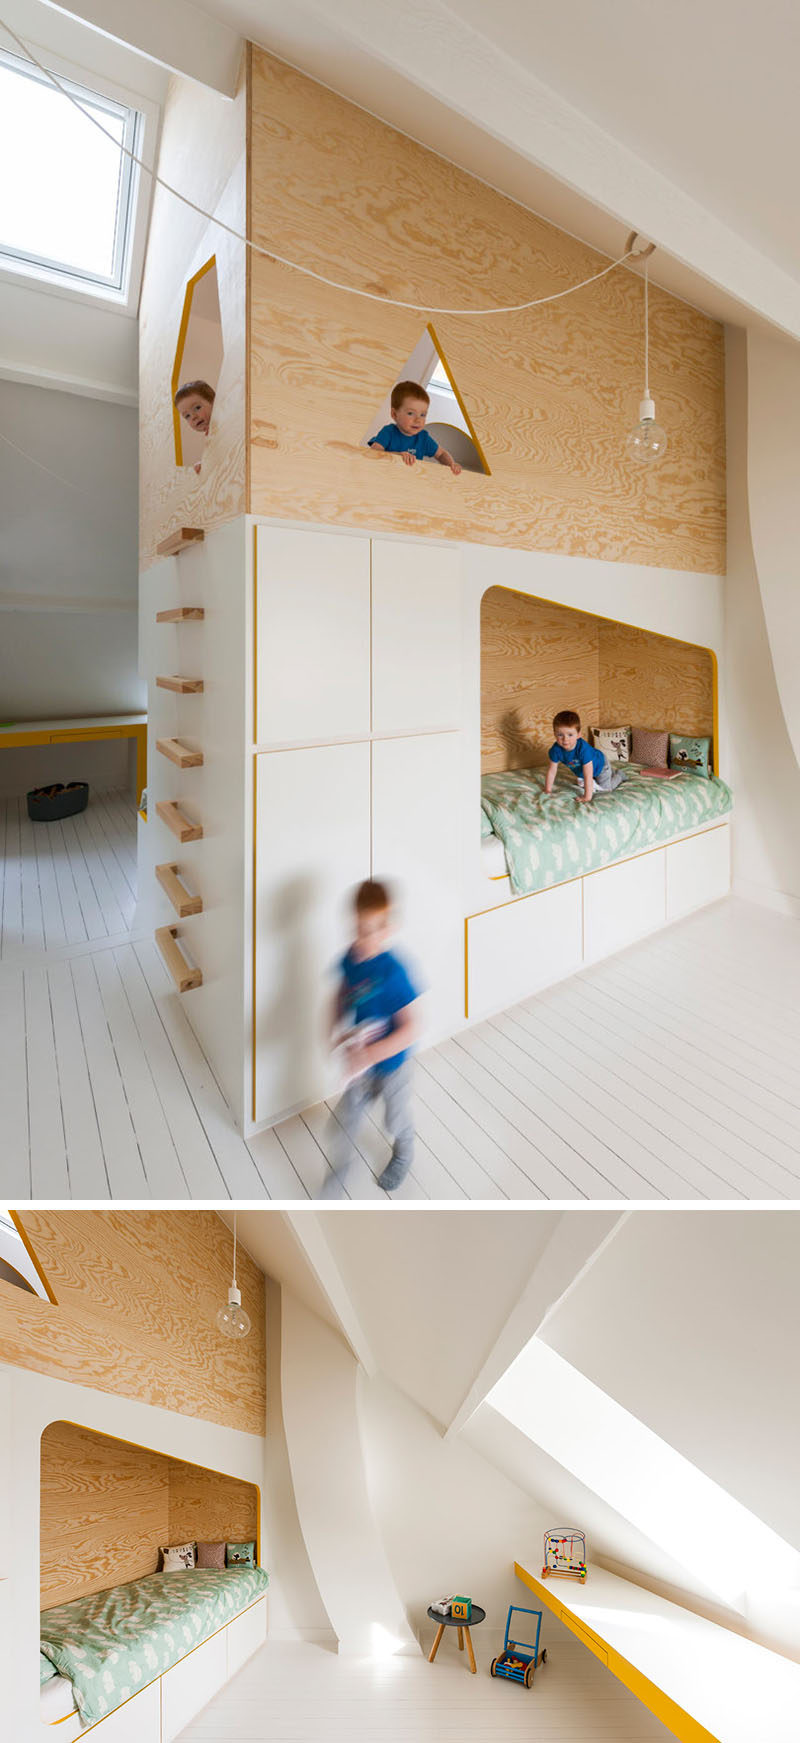 kids double bed design